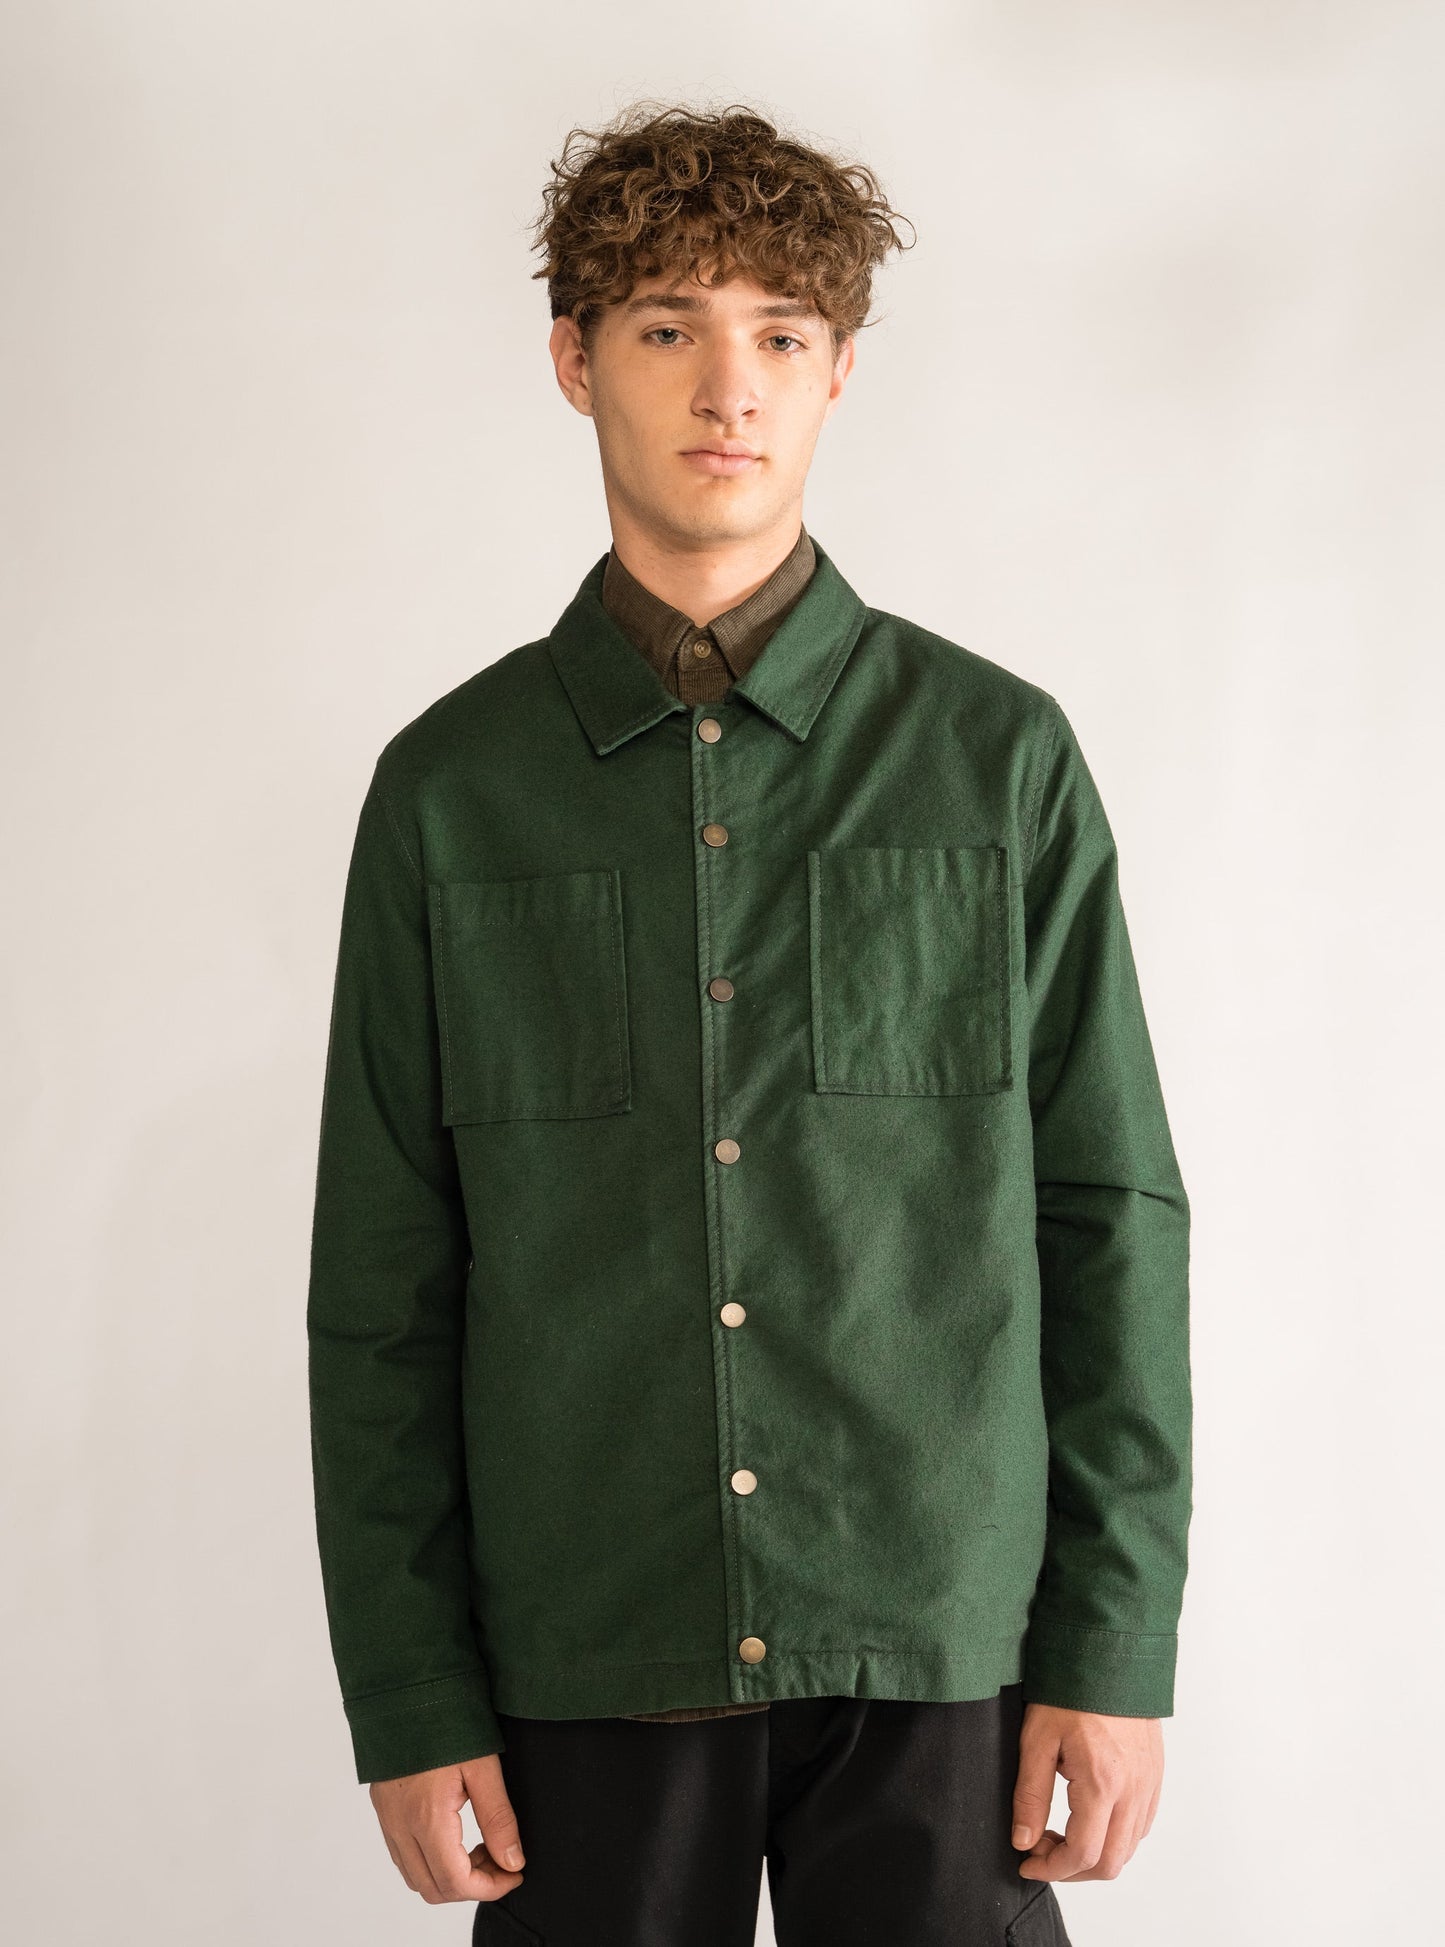 This Charming Man Jacket, Verde Olivo